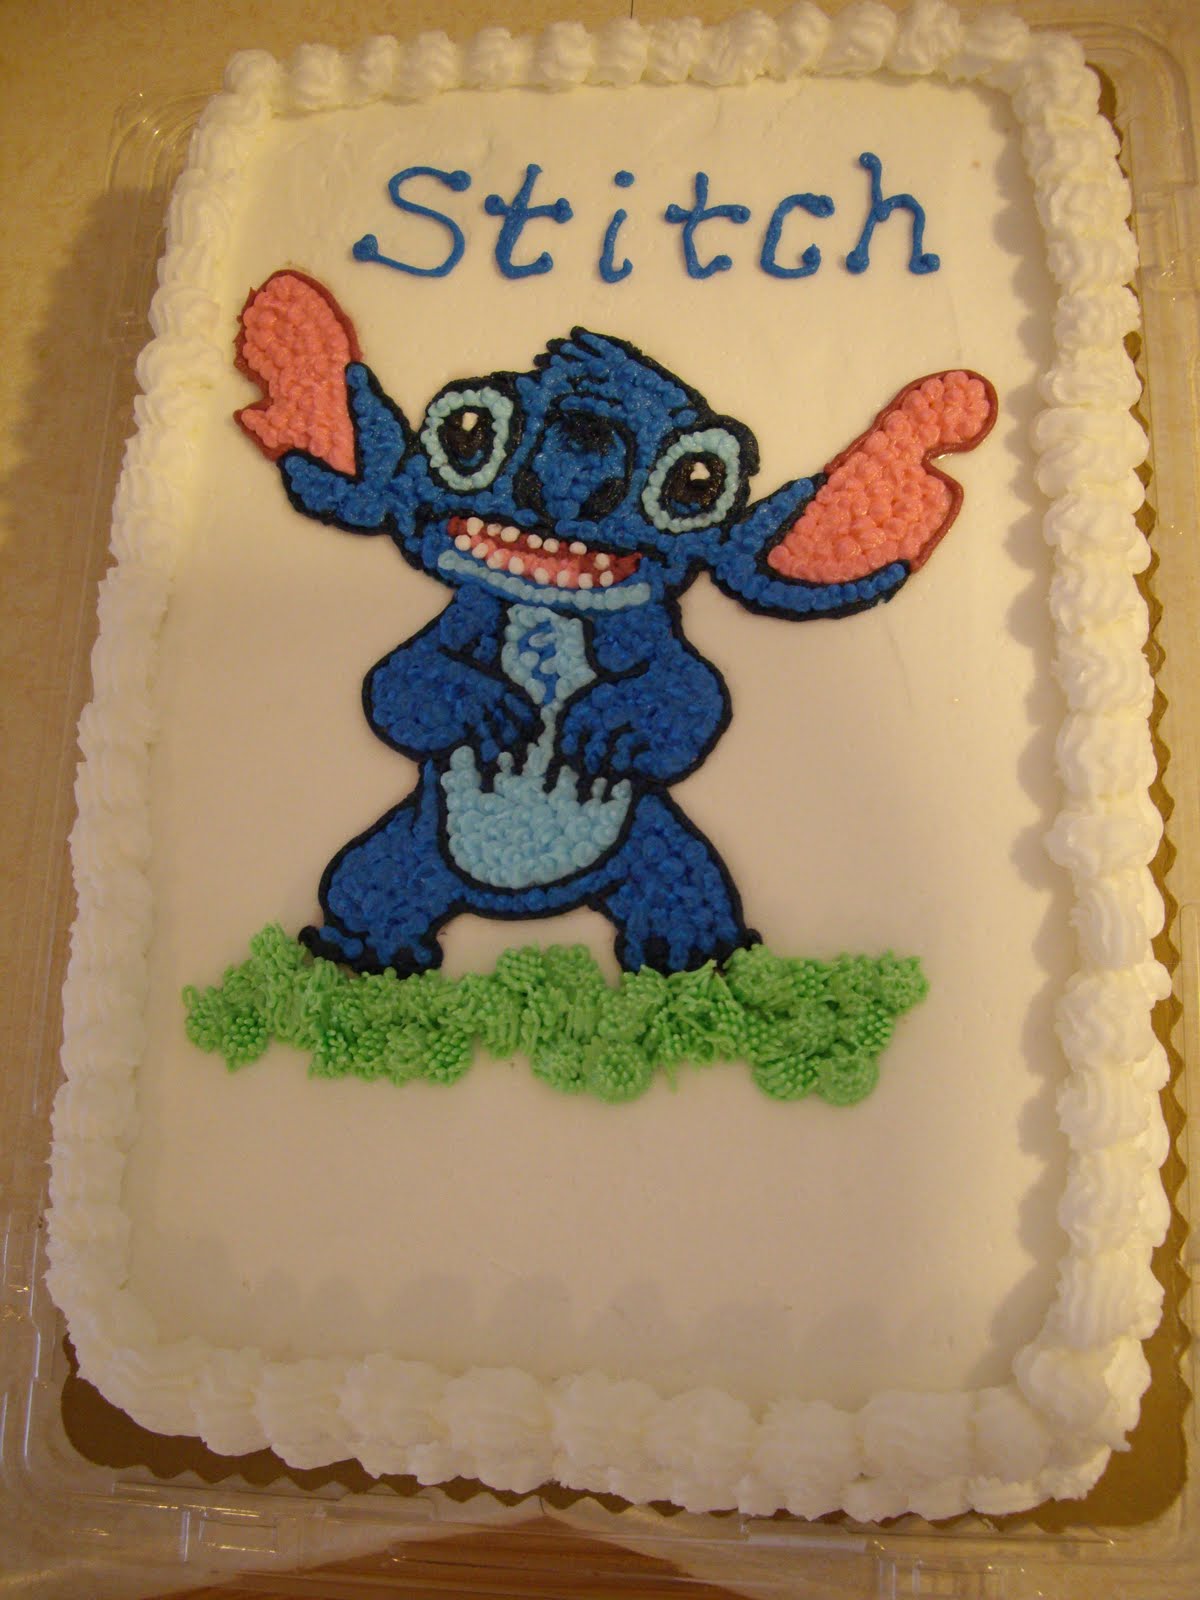 anniversaire - Page 3 June+2010+-+Stitch+cake+009